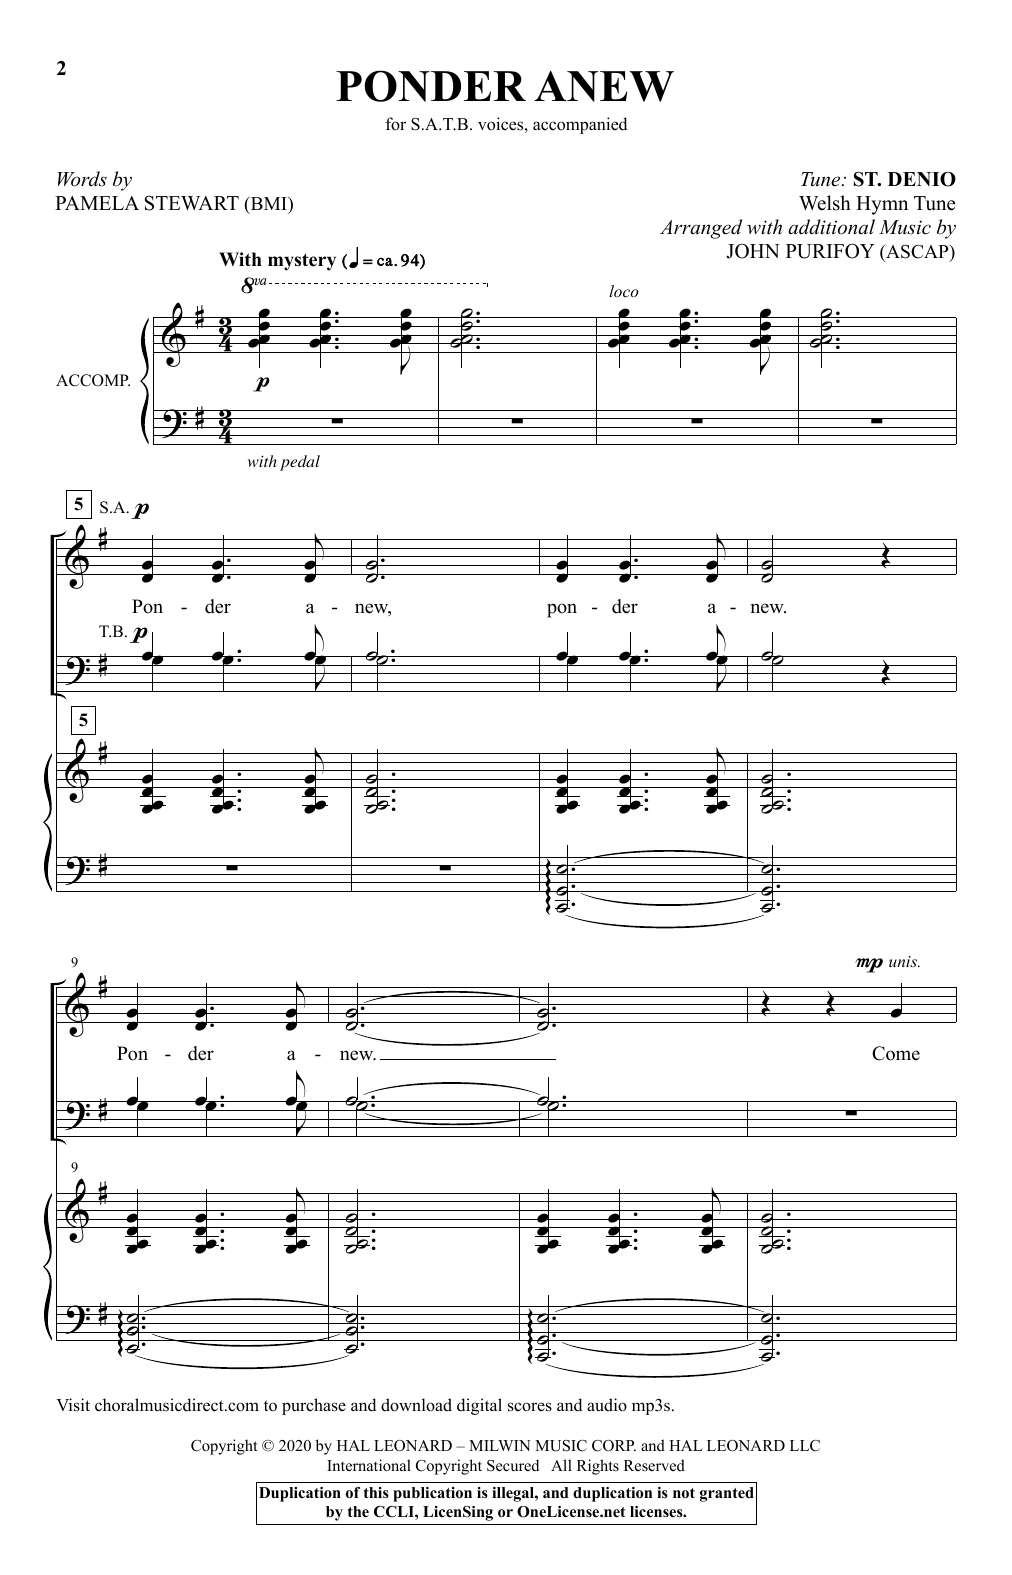 Pamela Stewart Ponder Anew (arr. John Purifoy) Sheet Music Notes & Chords for SATB Choir - Download or Print PDF